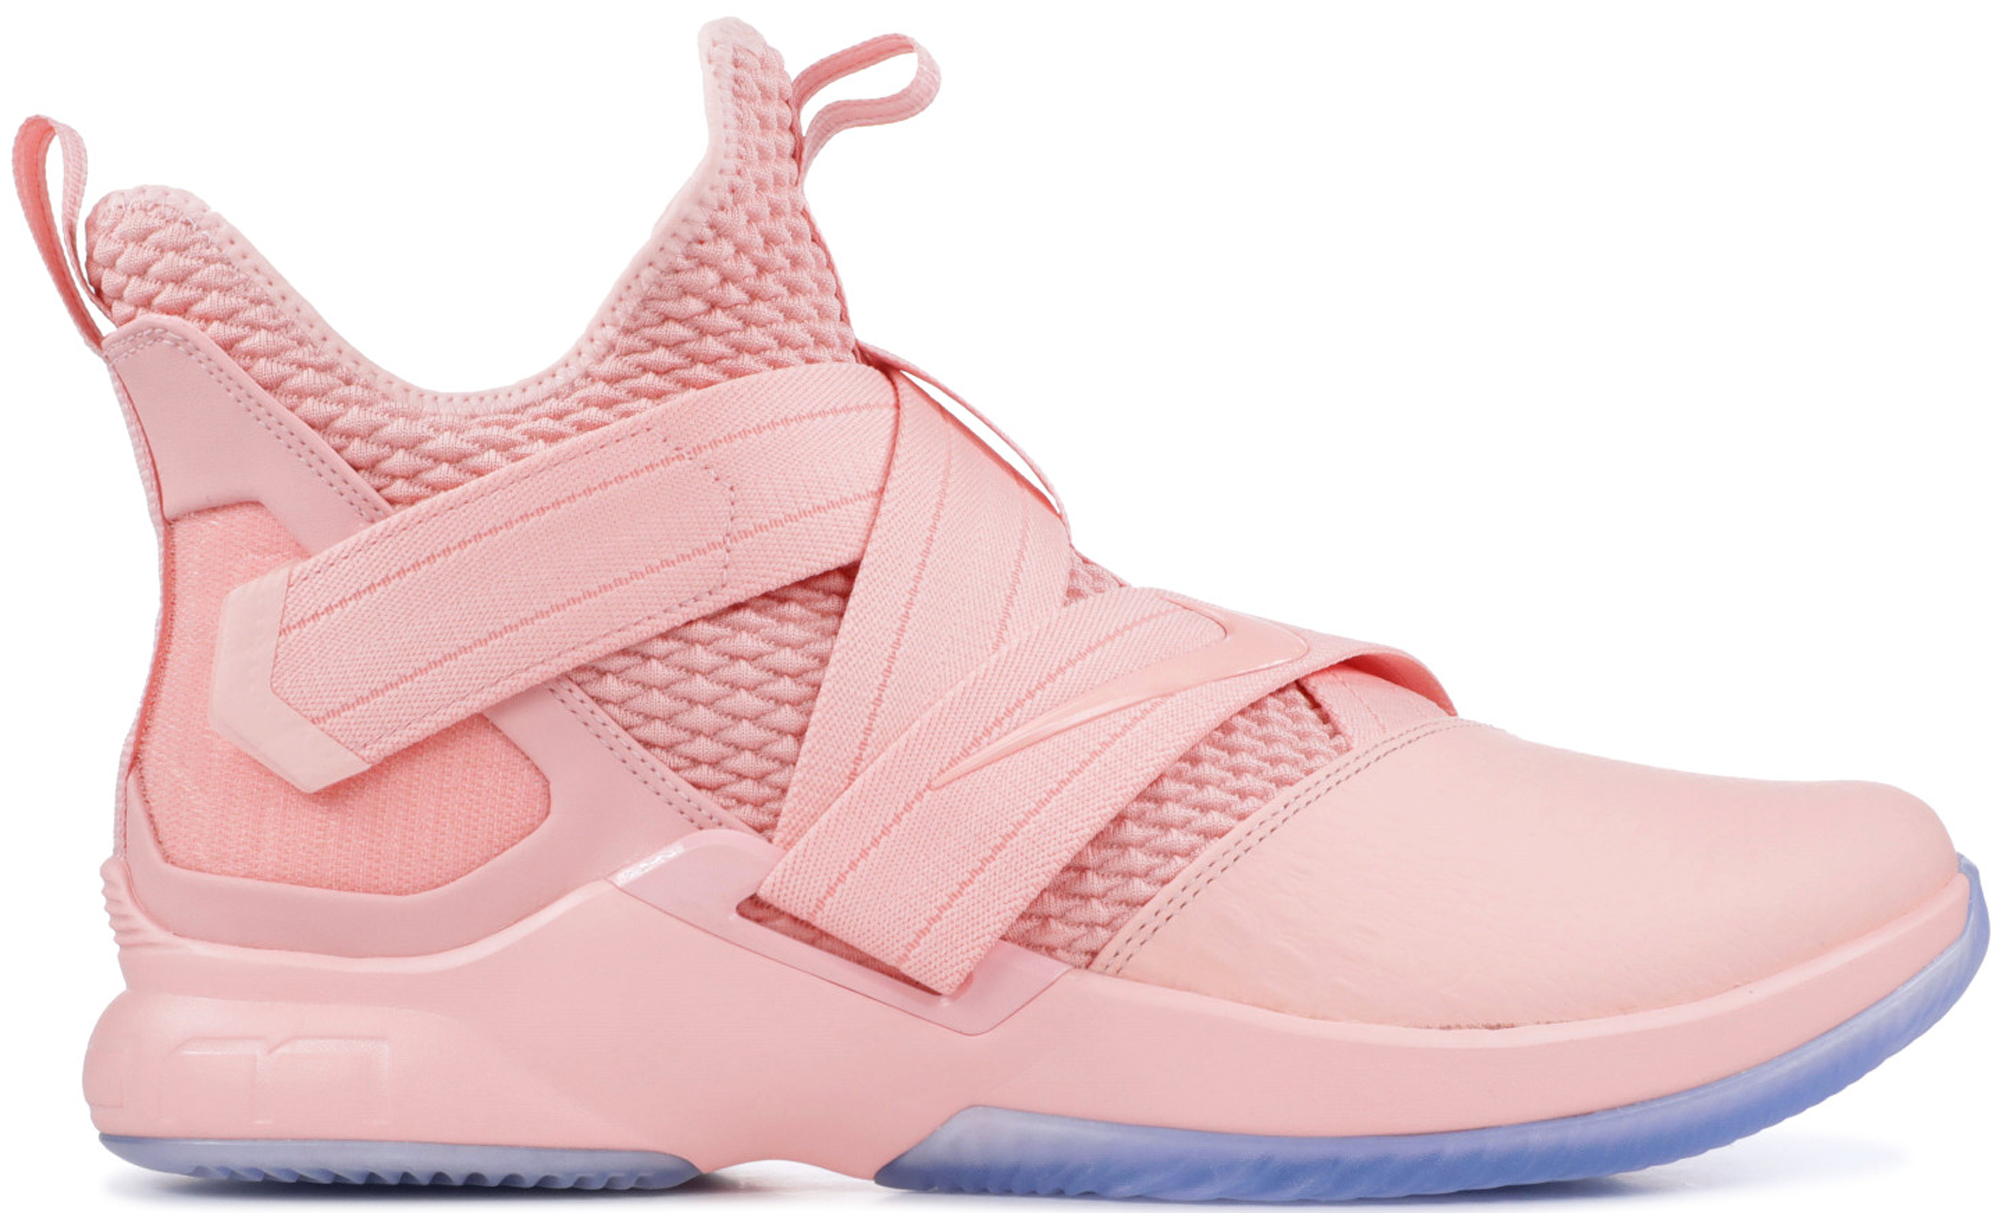 Nike LeBron Soldier 12 Soft Pink 